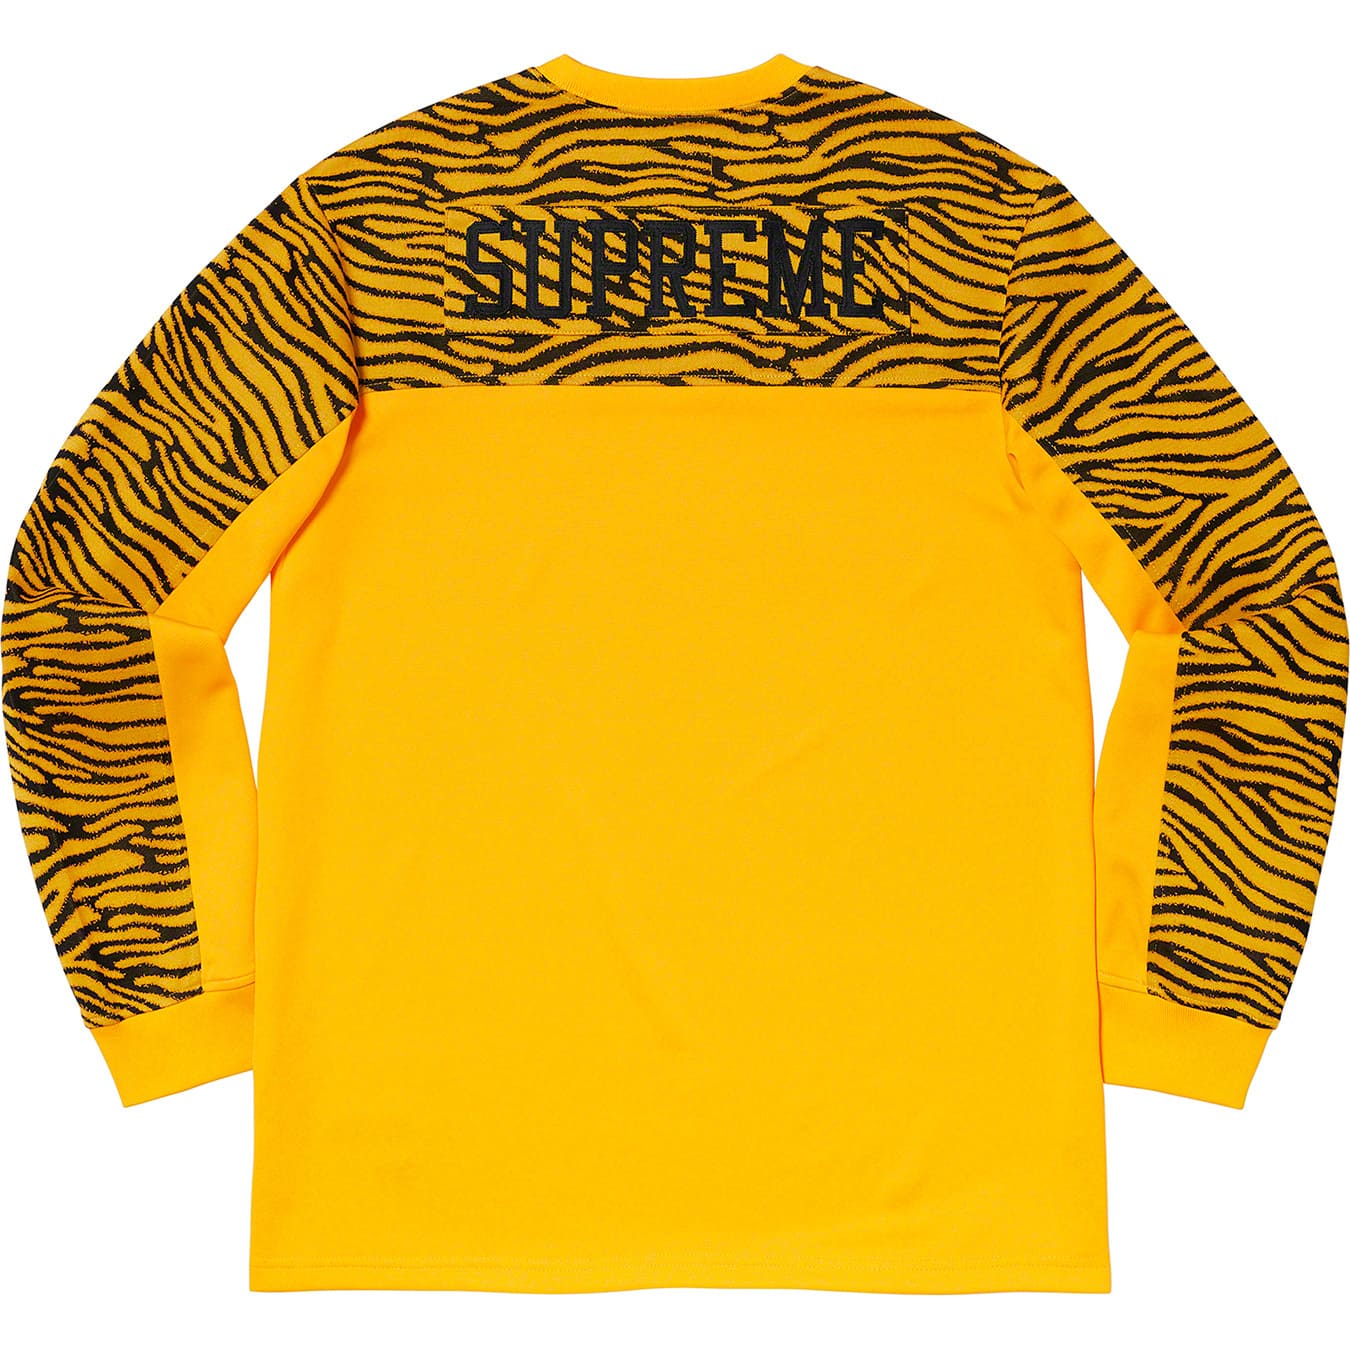 Supreme Zebra L/S Top